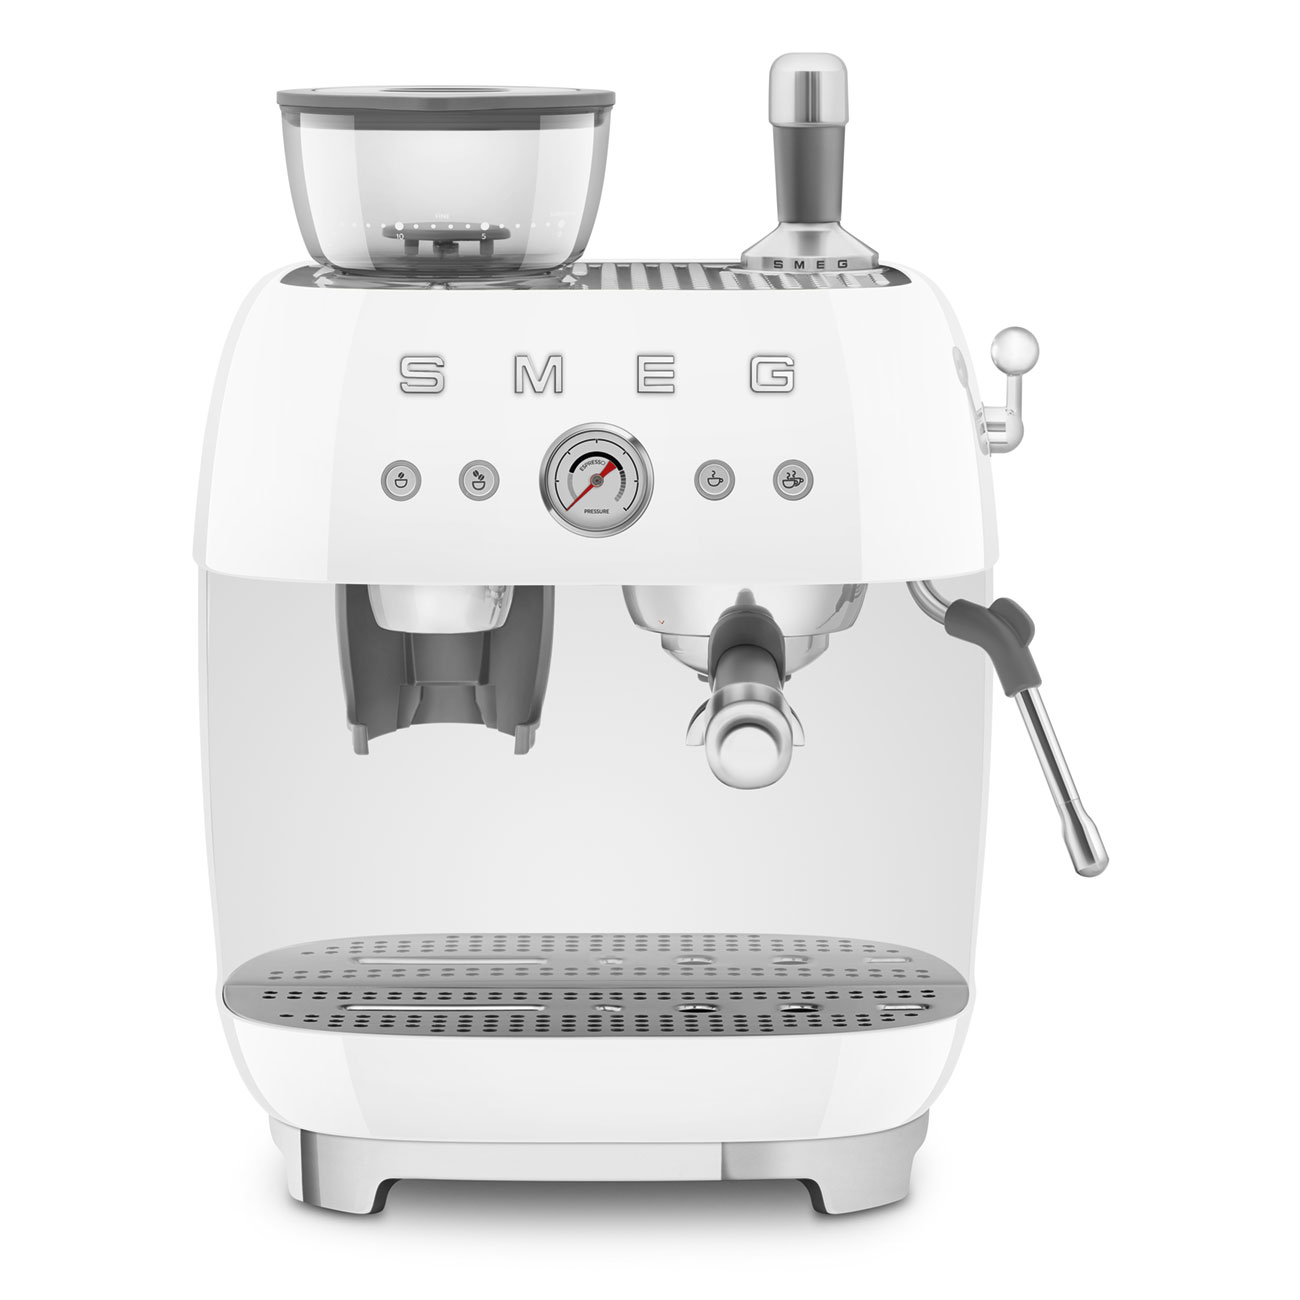 Smeg White Espresso Manual Coffee Machine with Grinder_1